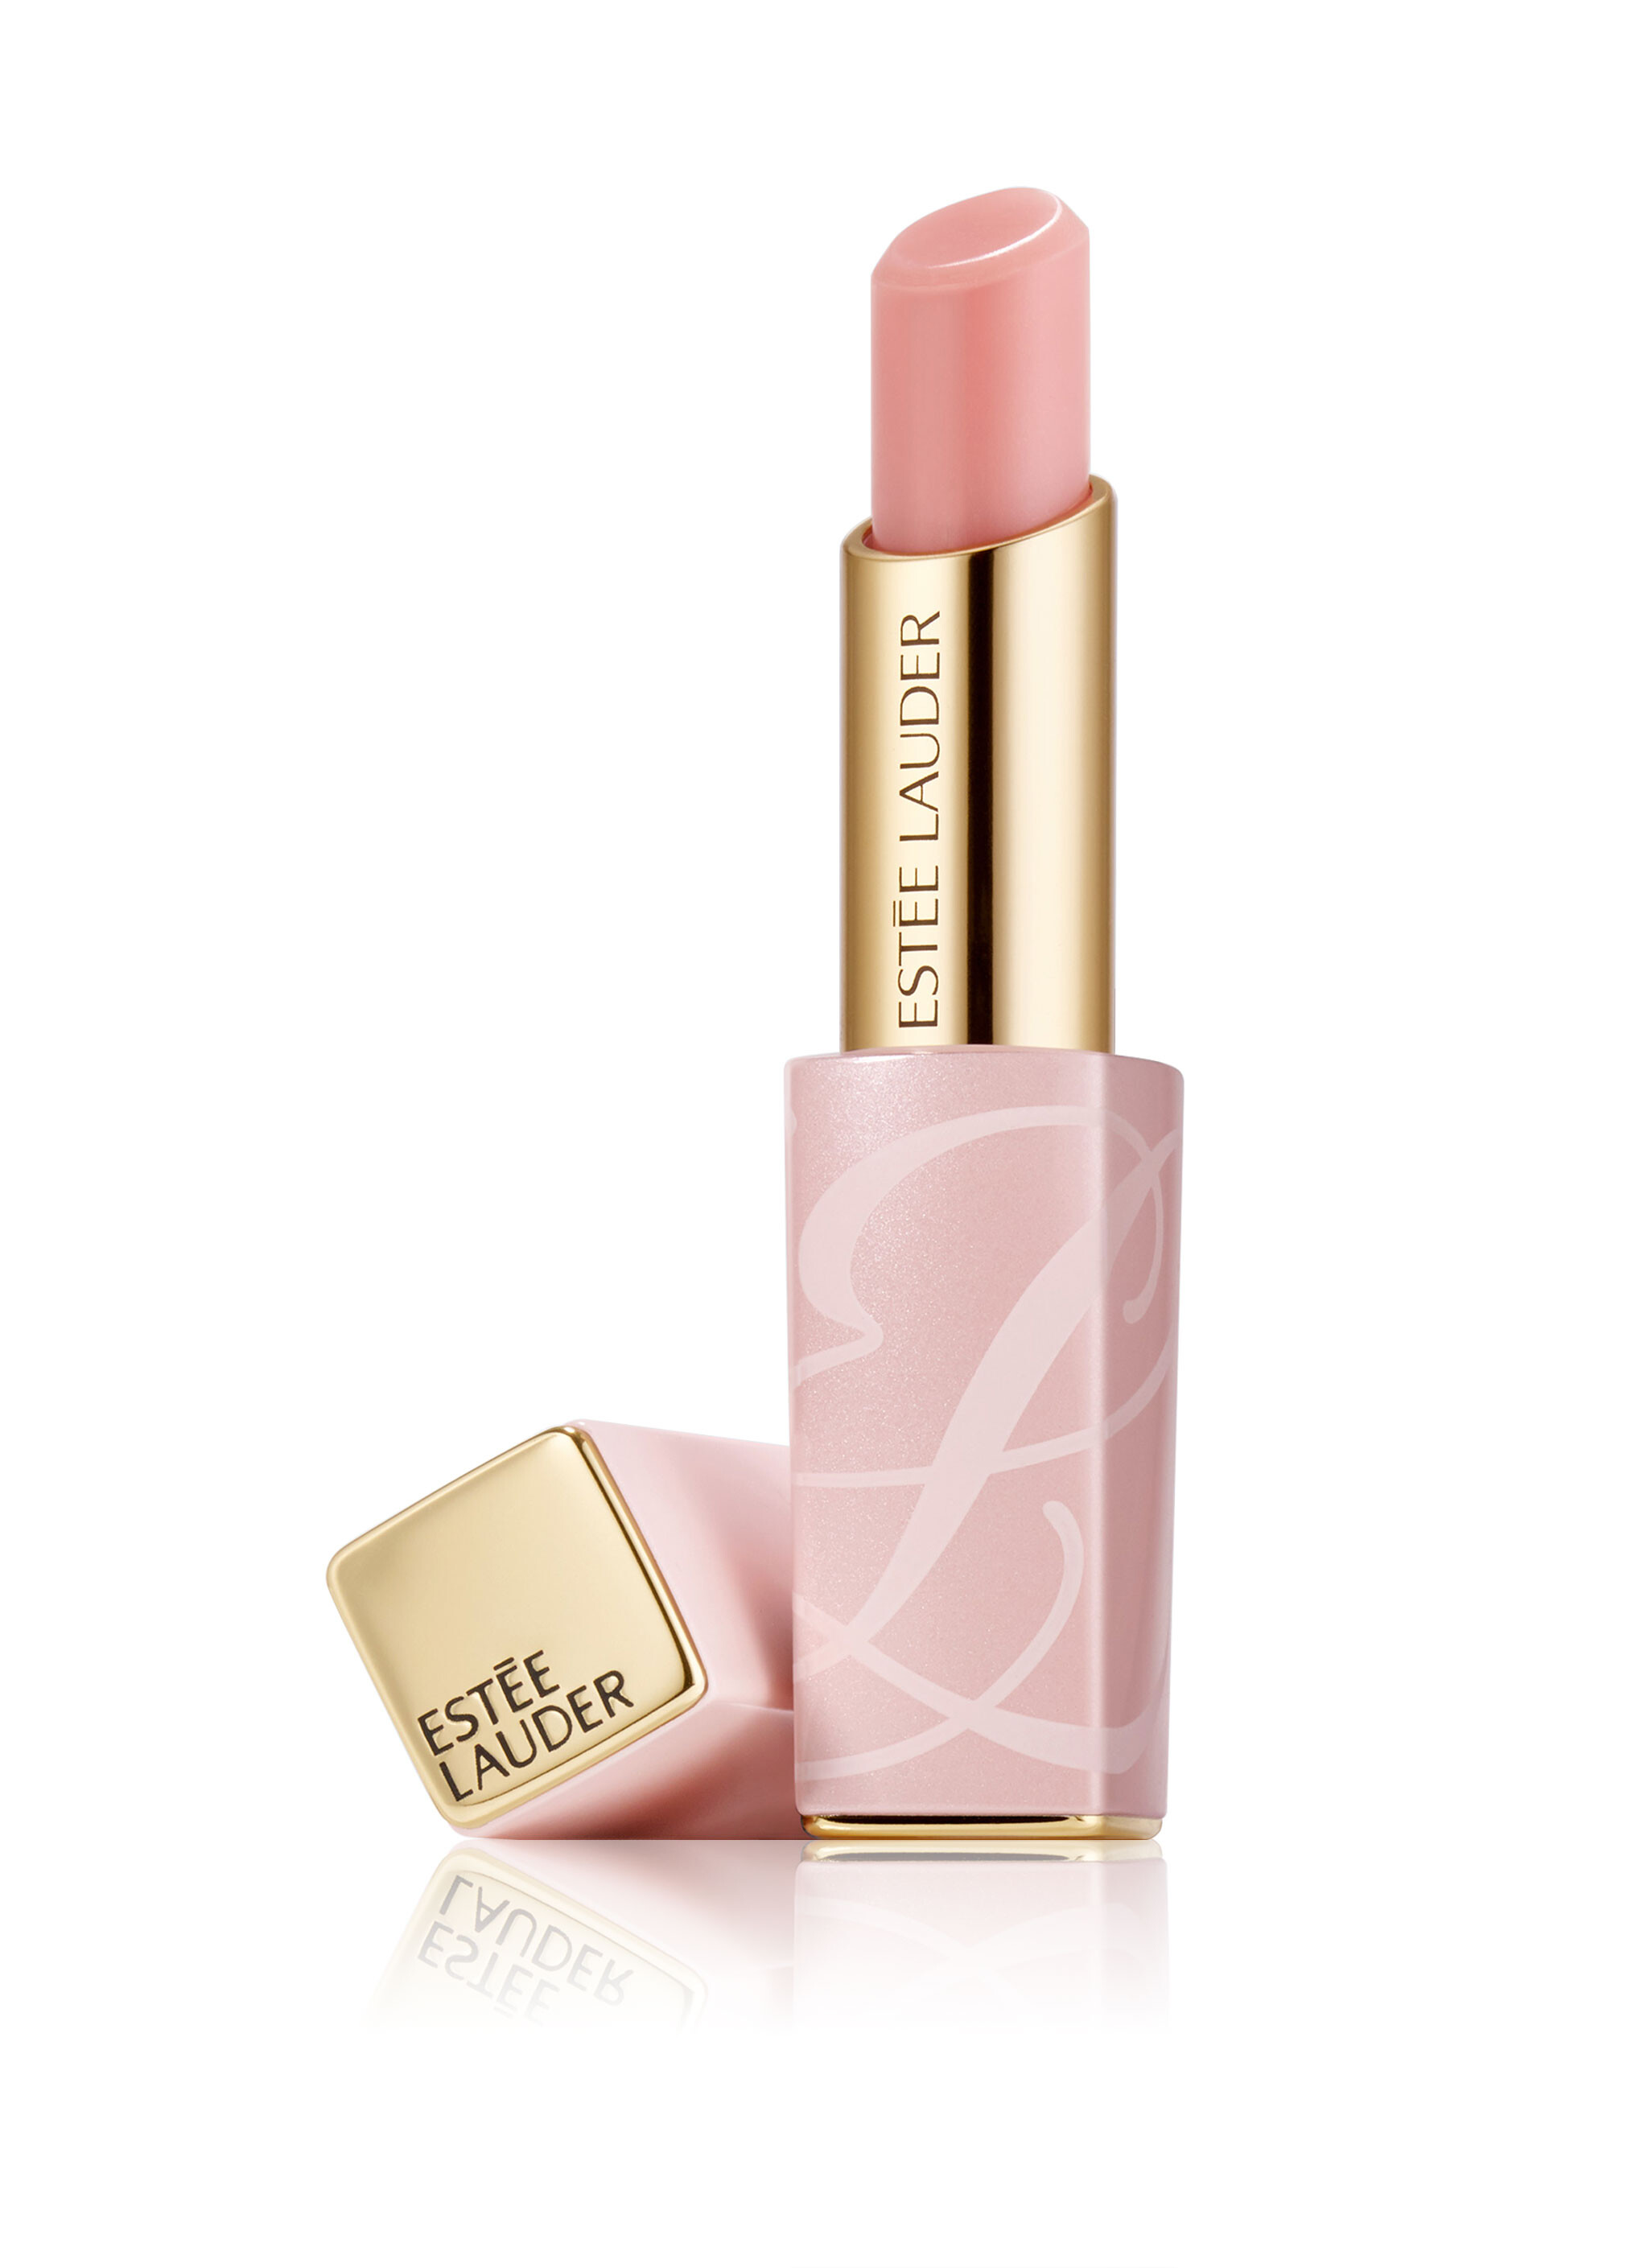 Lippenpflege Estee Lauder PC Envy Blooming Lip 32g kaufen